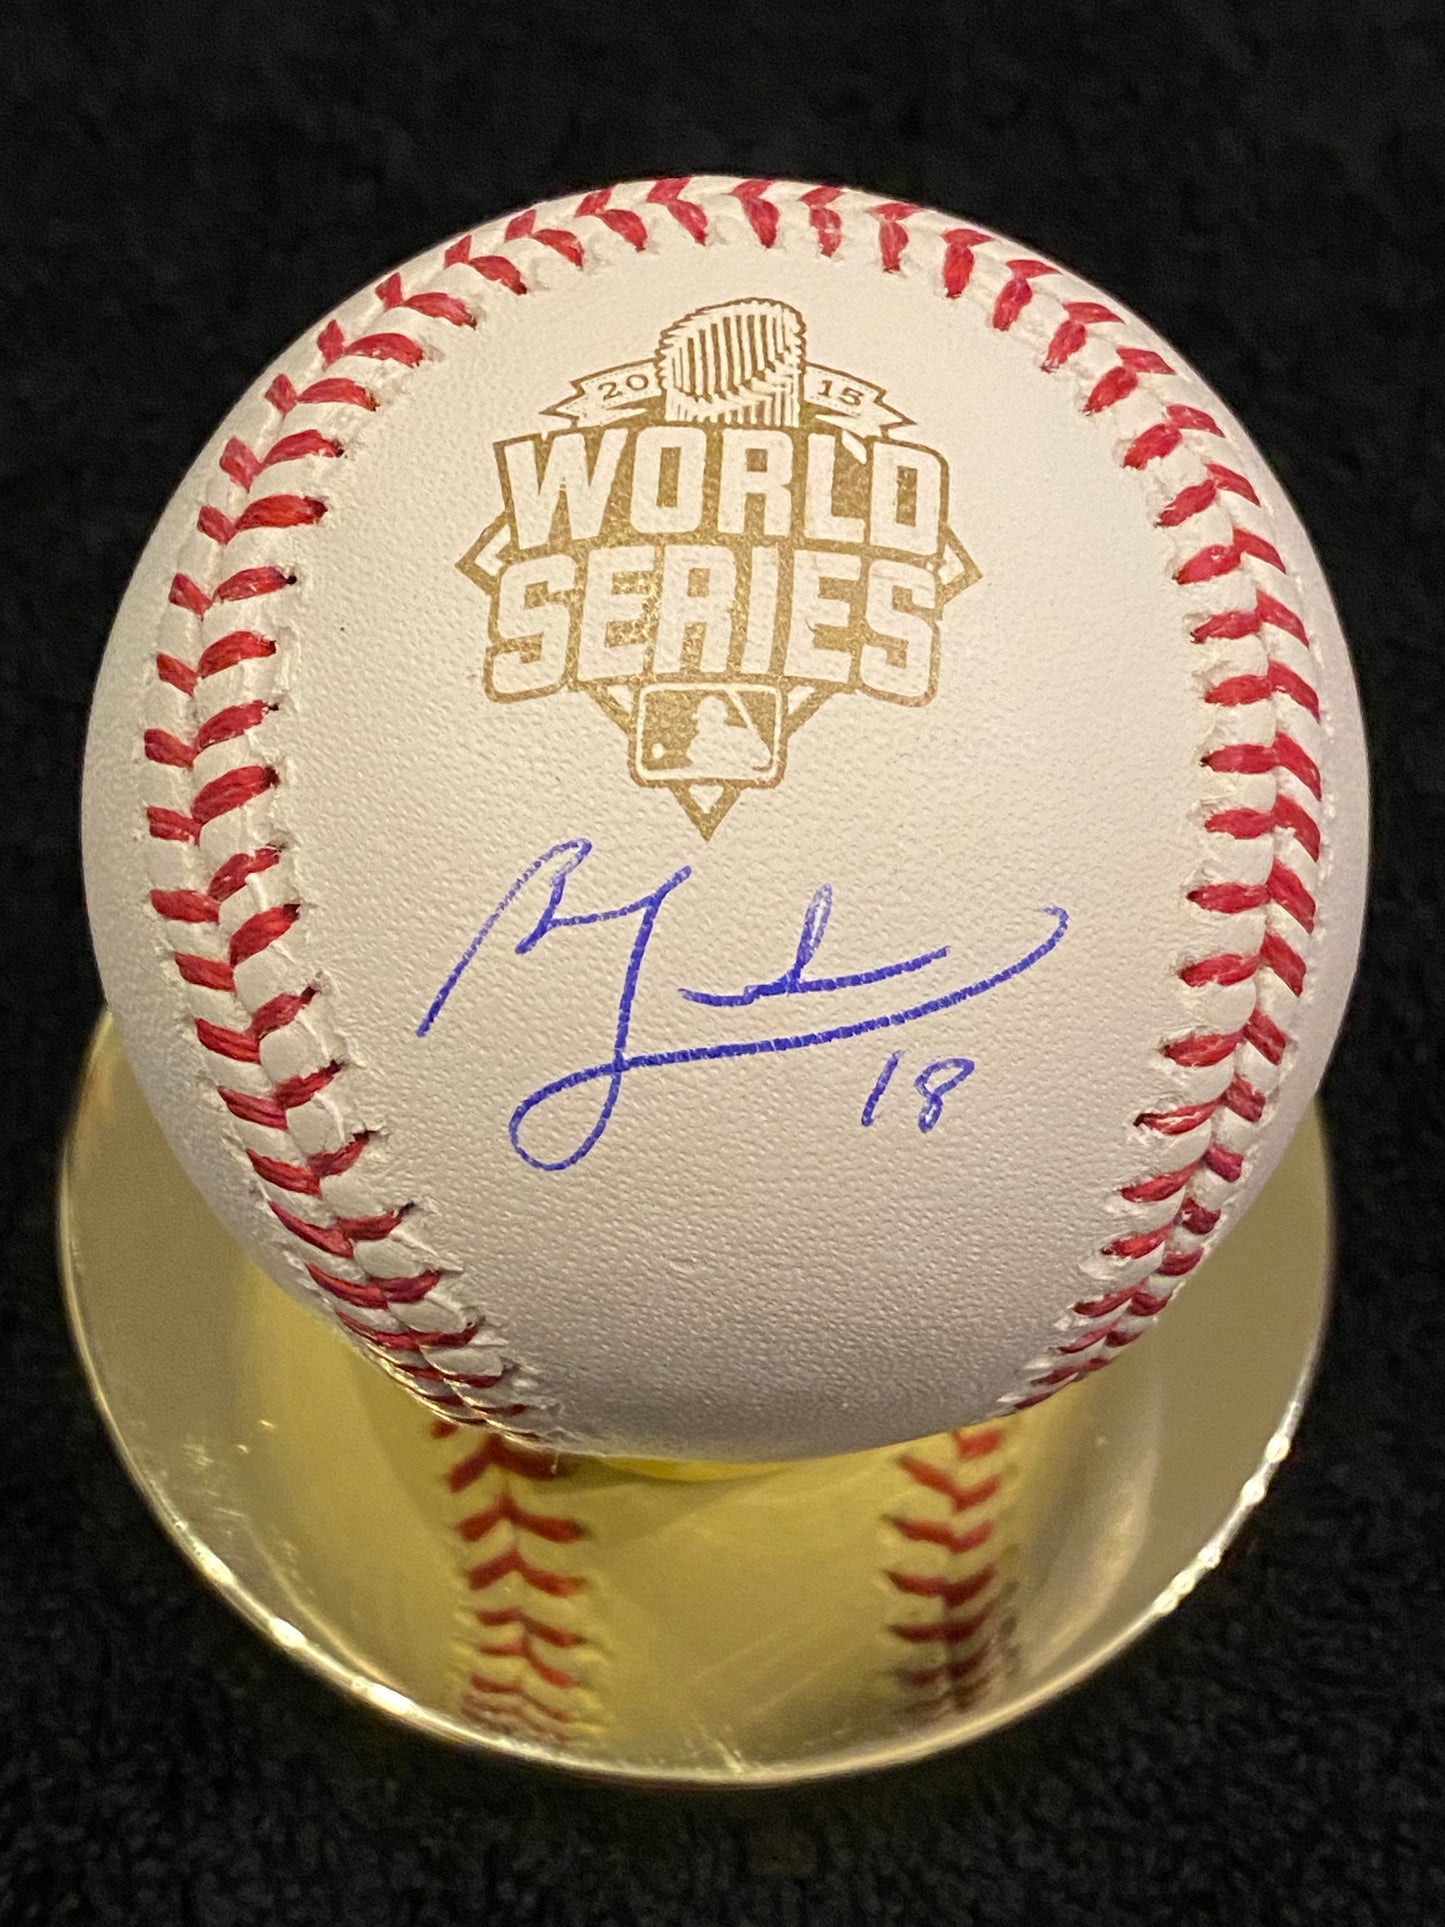 Ben Zobrist signed 2015 WS MLB Baseball (GT Sports Marketing COA)